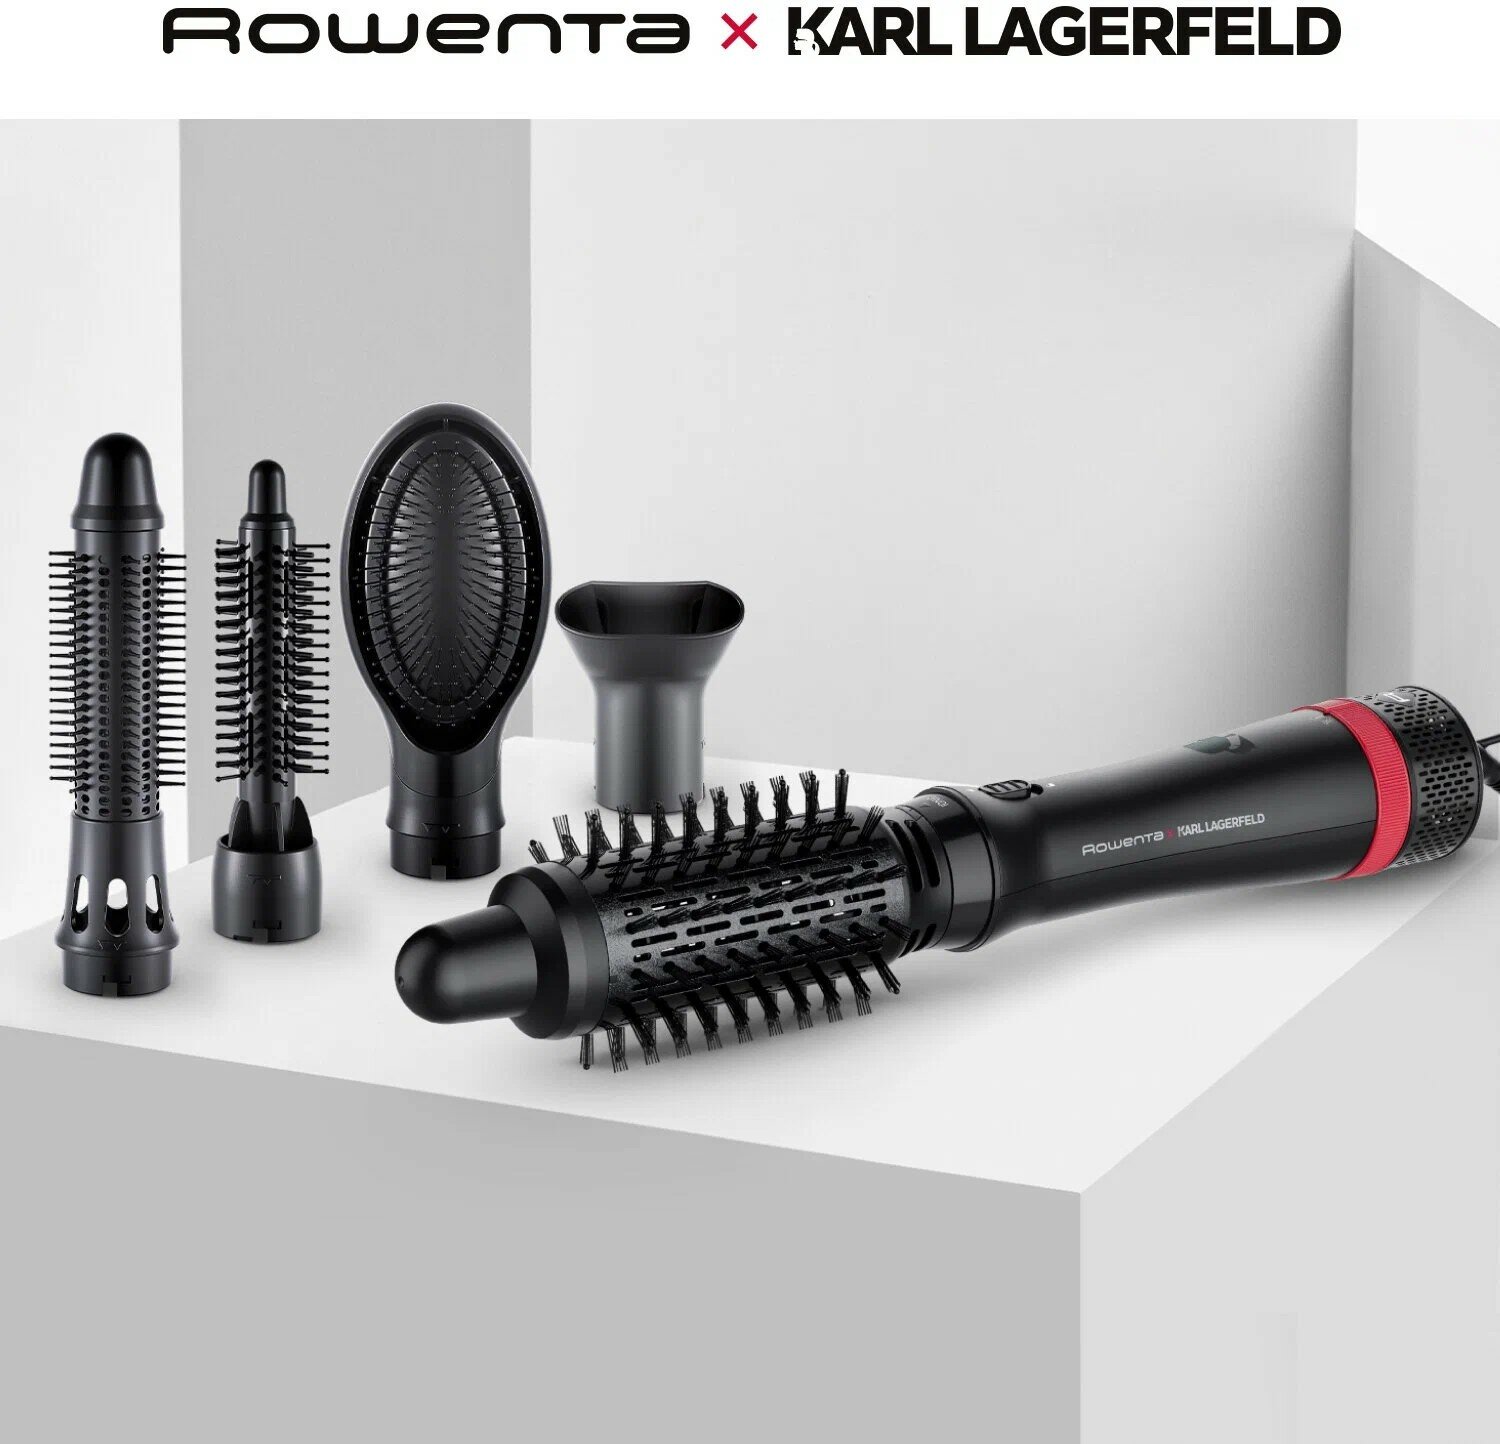 Фен-щетка 5в1 Rowenta Karl Lagerfeld Express Style CF634LF0 с 4 насадками и чехлом, 3 режима, 800 Вт, черная/красная